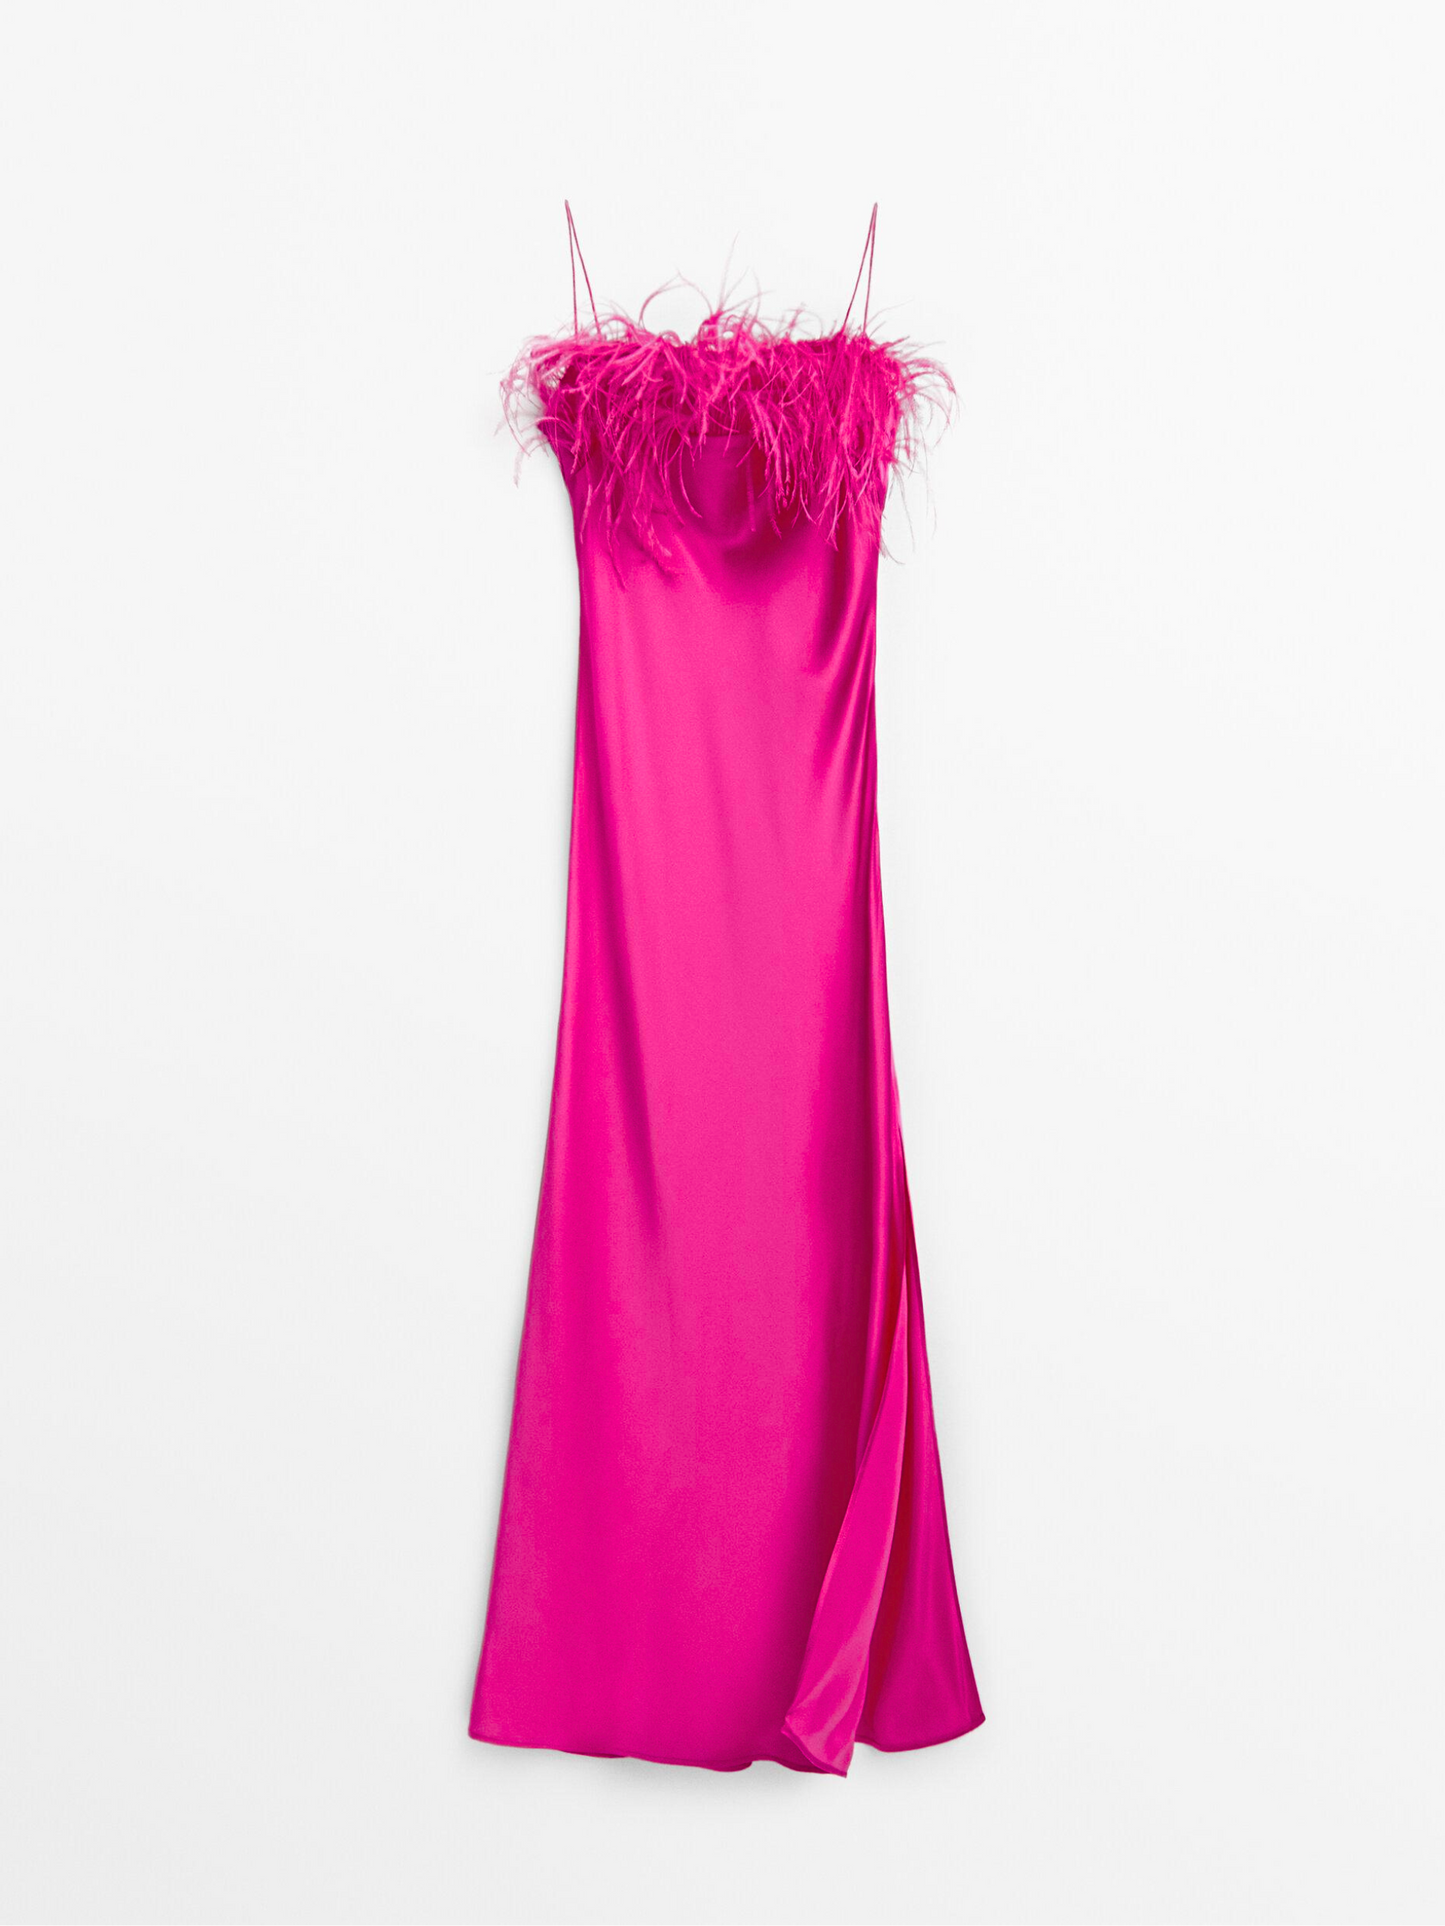 Liamy - Silk Satin Feather Trim Dress pink, Cielie, Pink Dress, Summer dress pink feather, Pink bridesmaids dress, Pink satin dress